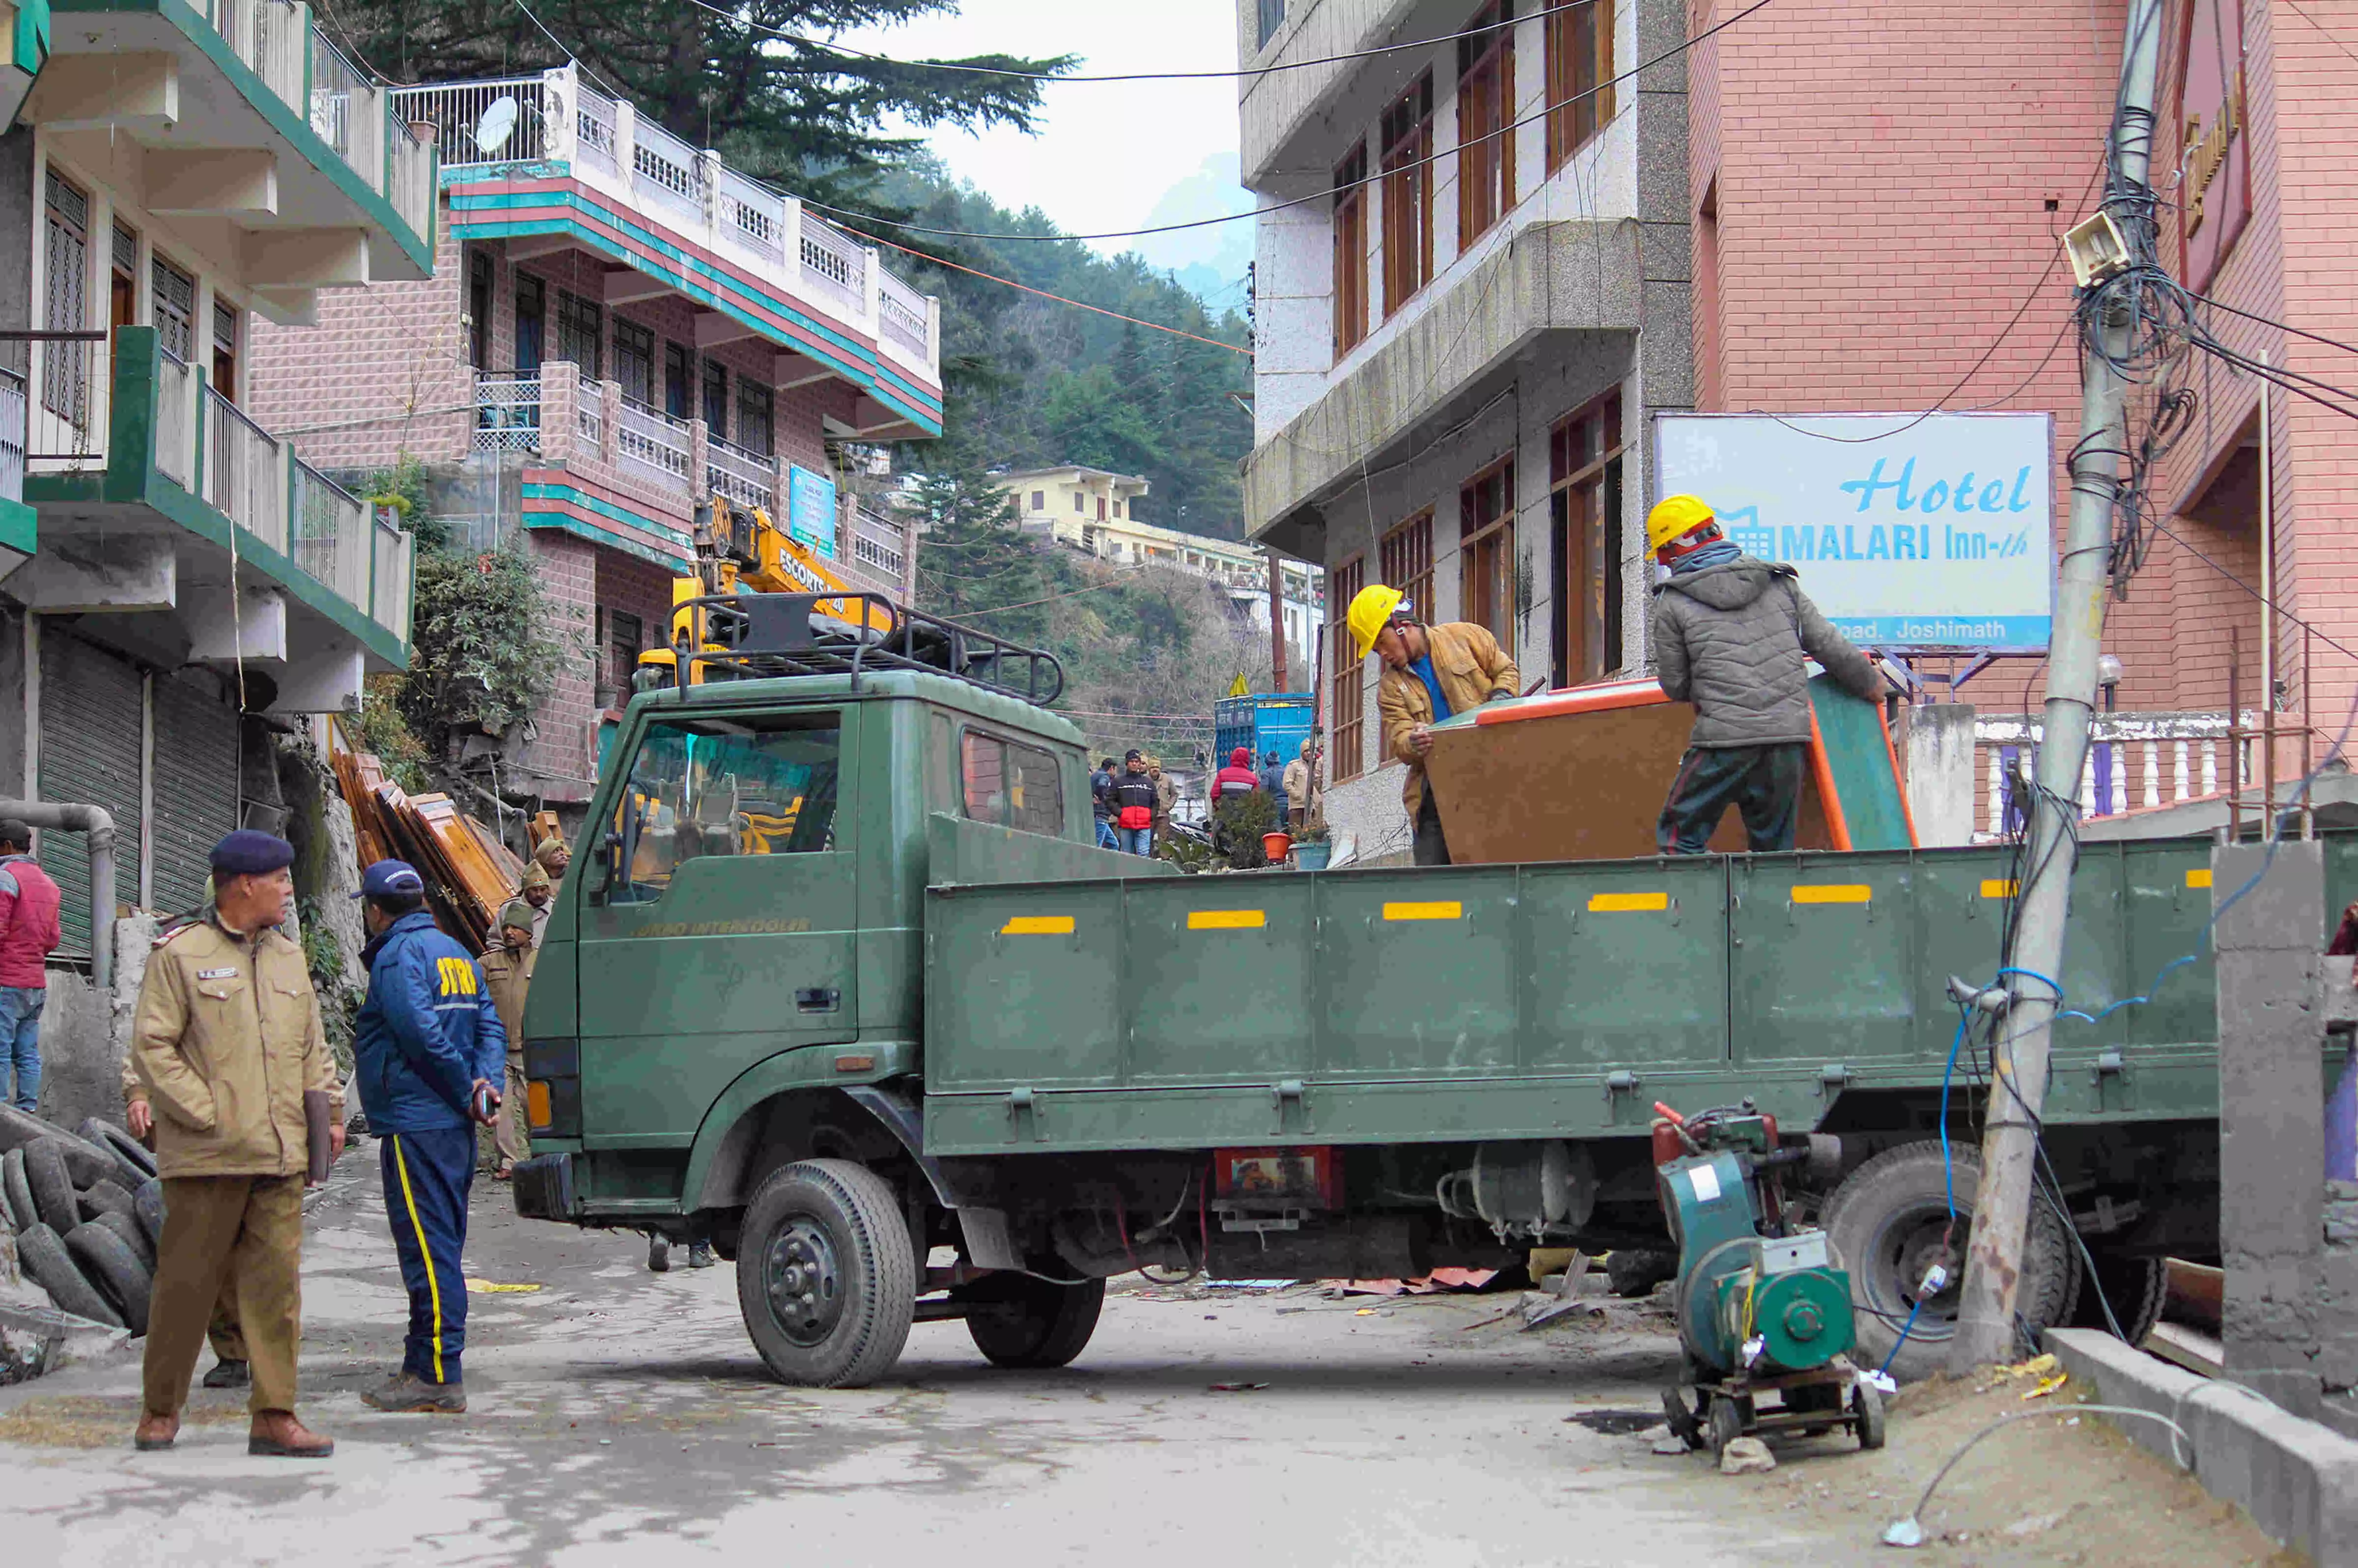 Badrinath head priest urges authorities to halt works affecting Joshimath, Himalayan region